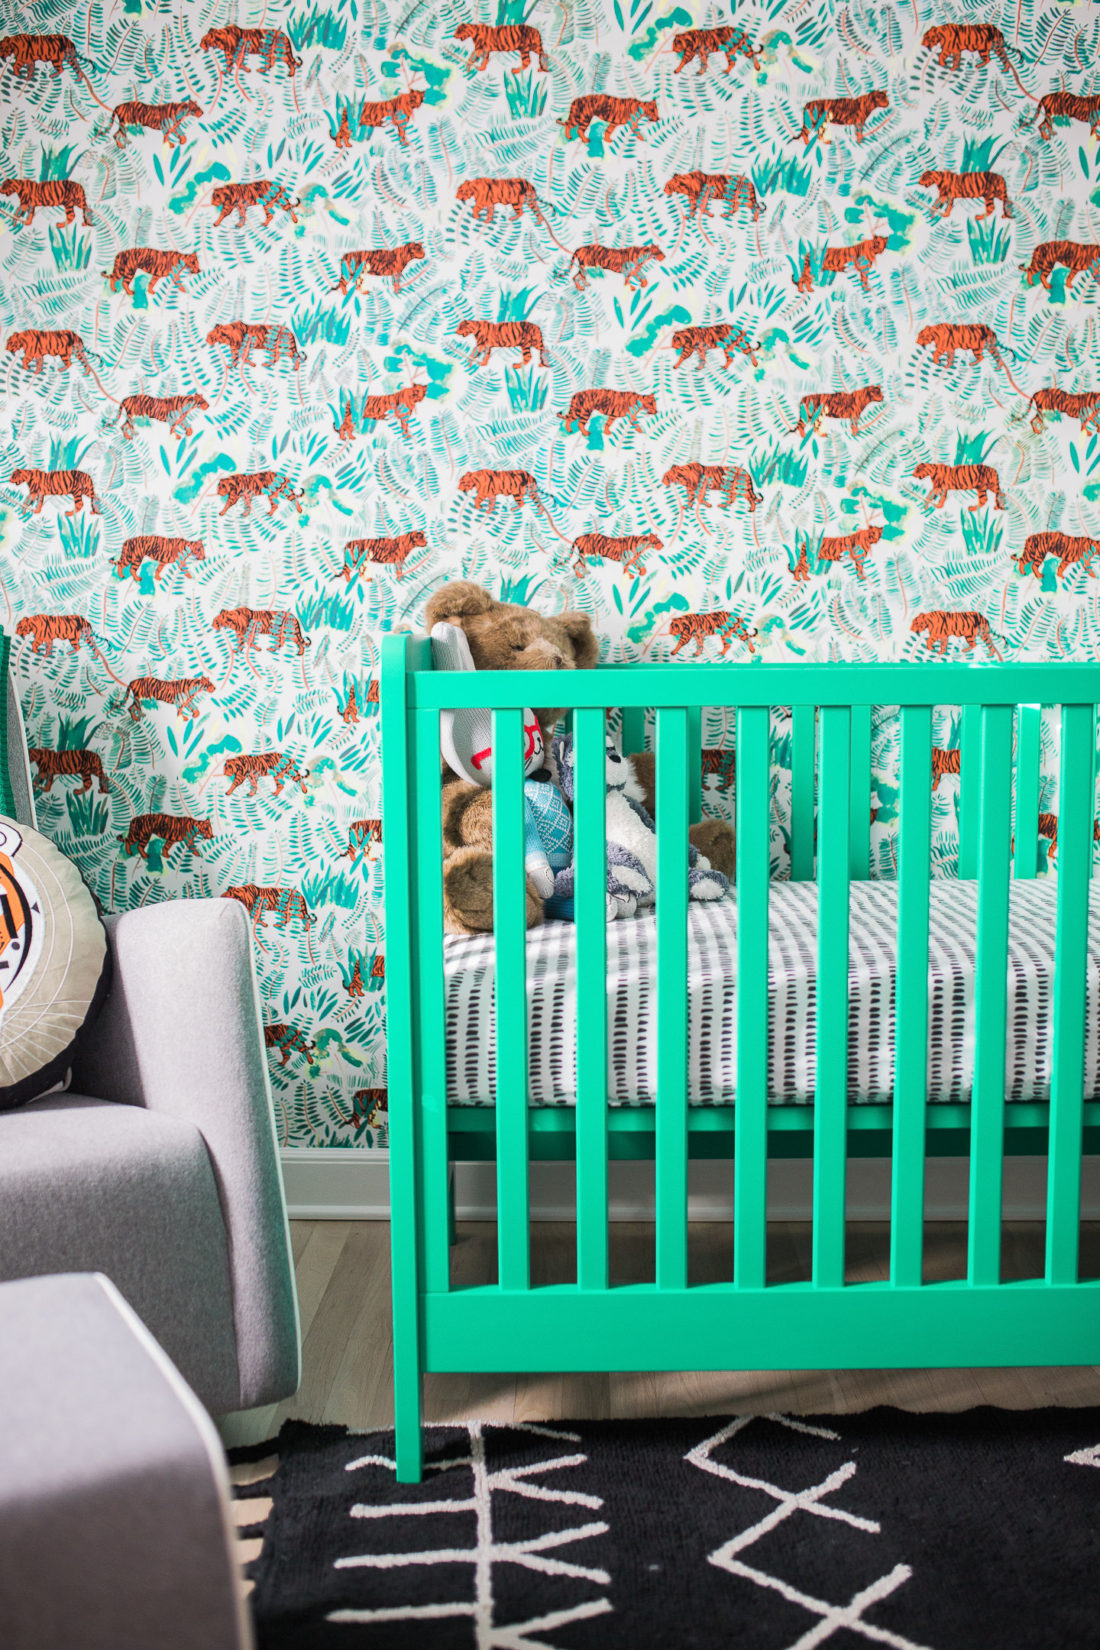 Nursery designed by Eva Amurri Martino of lifestyle and motherhood blog Happily Eva After for her newborn son, Major